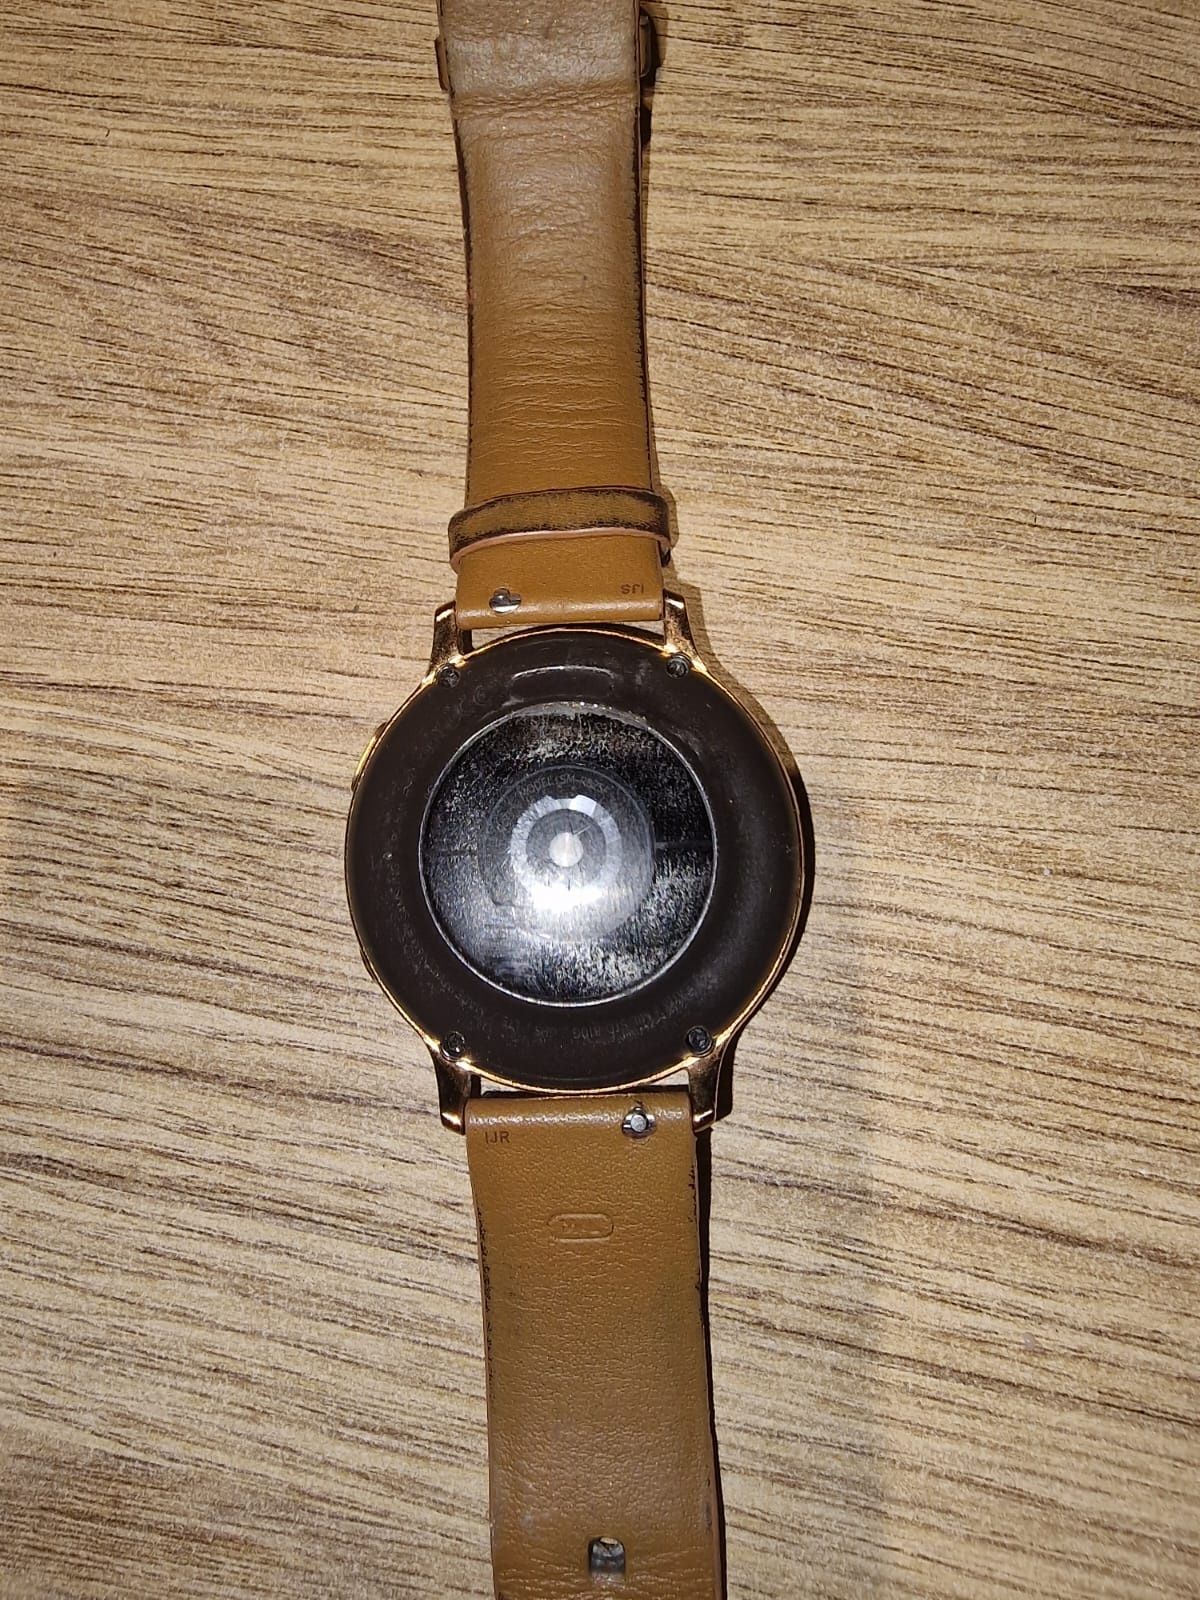 Vând ceas Galaxy Watch Active 2